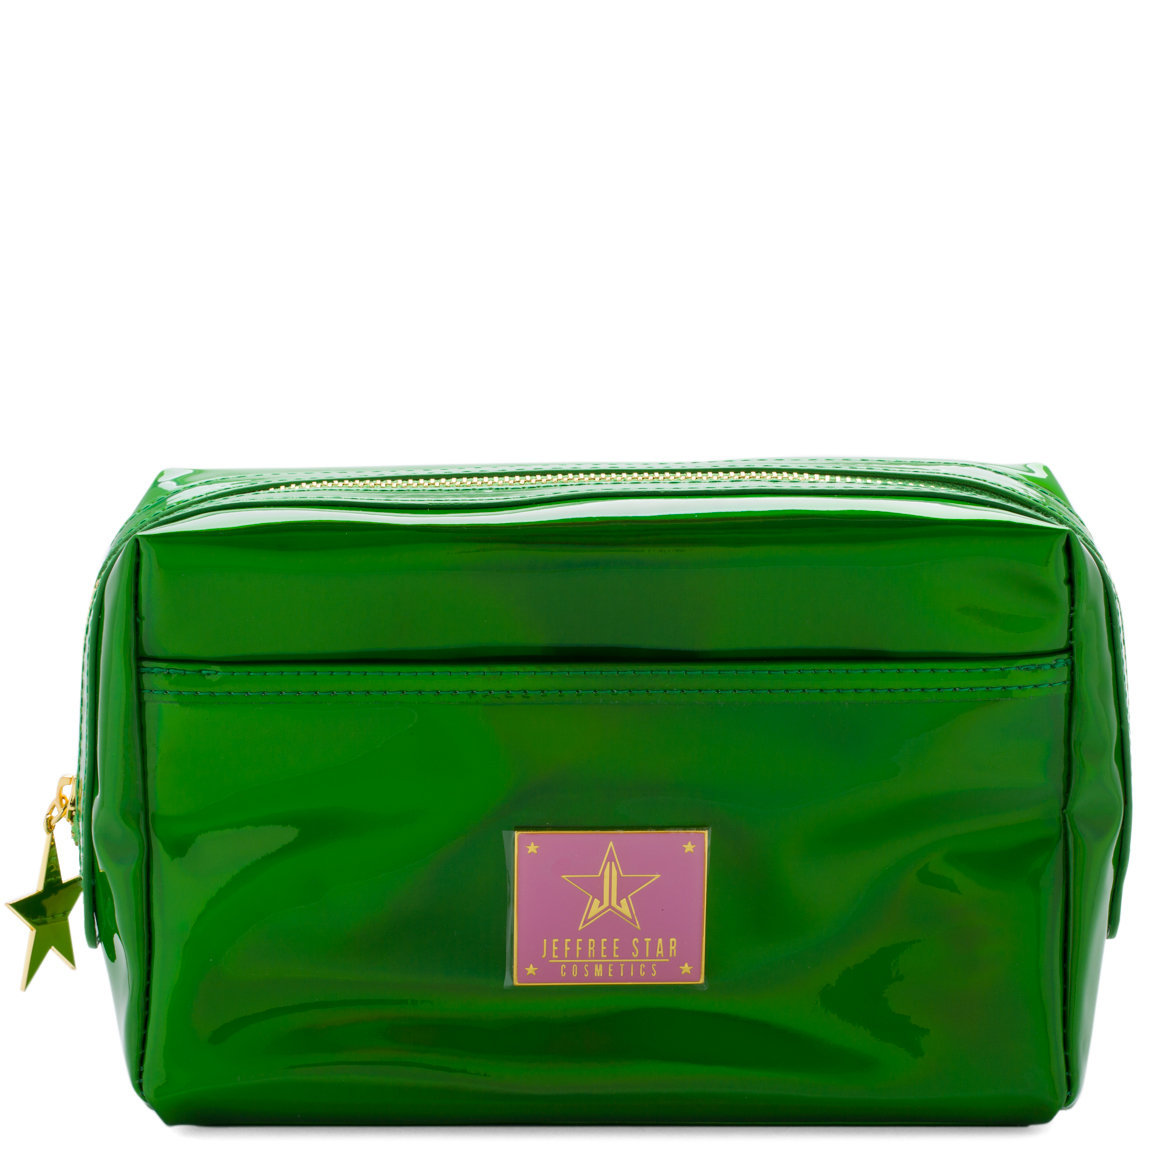 Jeffree Star Cosmetics Makeup Bag Holographic Alien Green | Beautylish